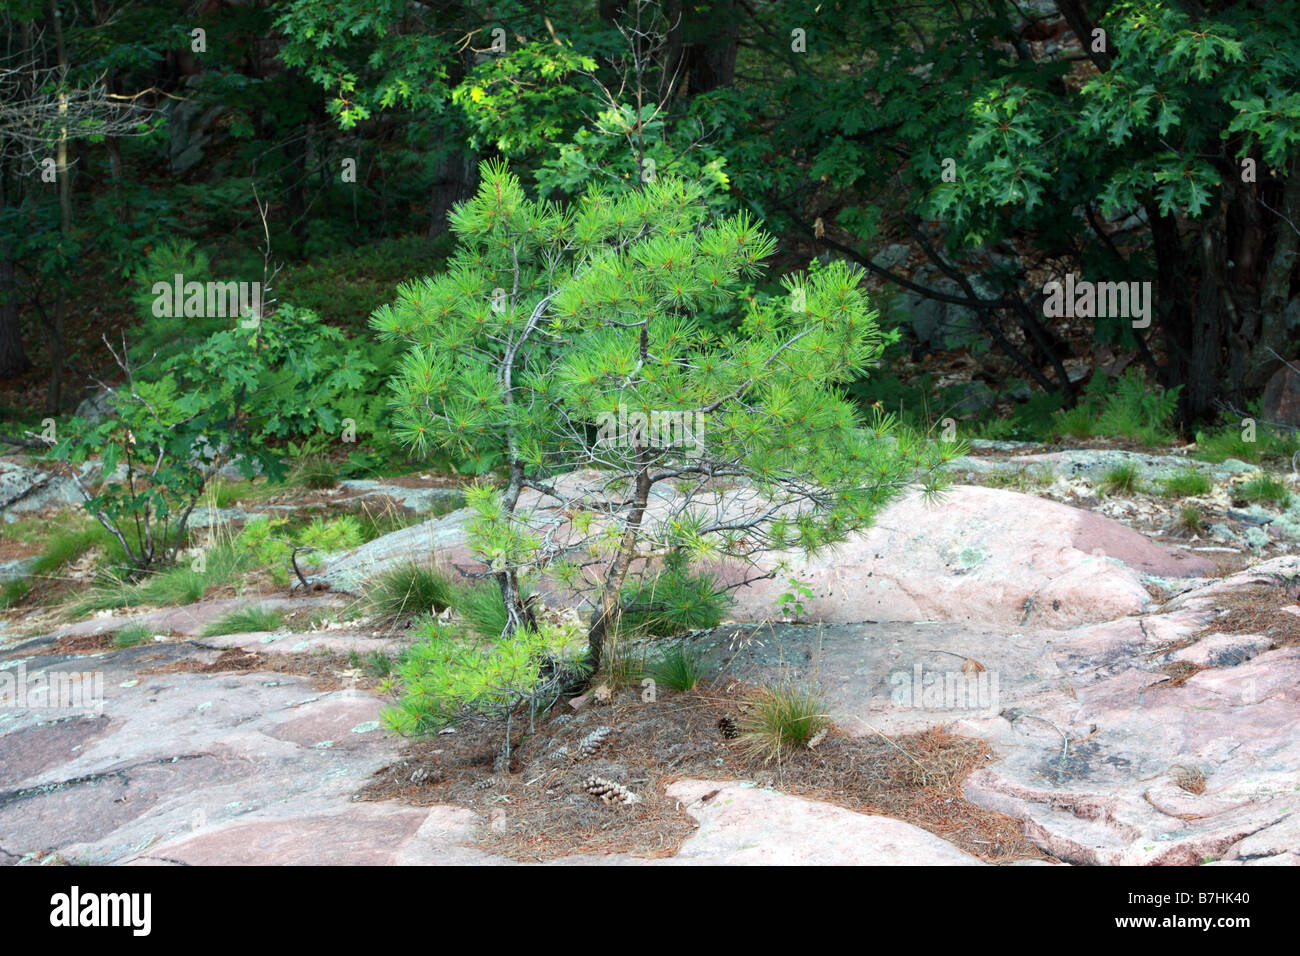 Eastern white pine seeding on rock surface Stock Photo